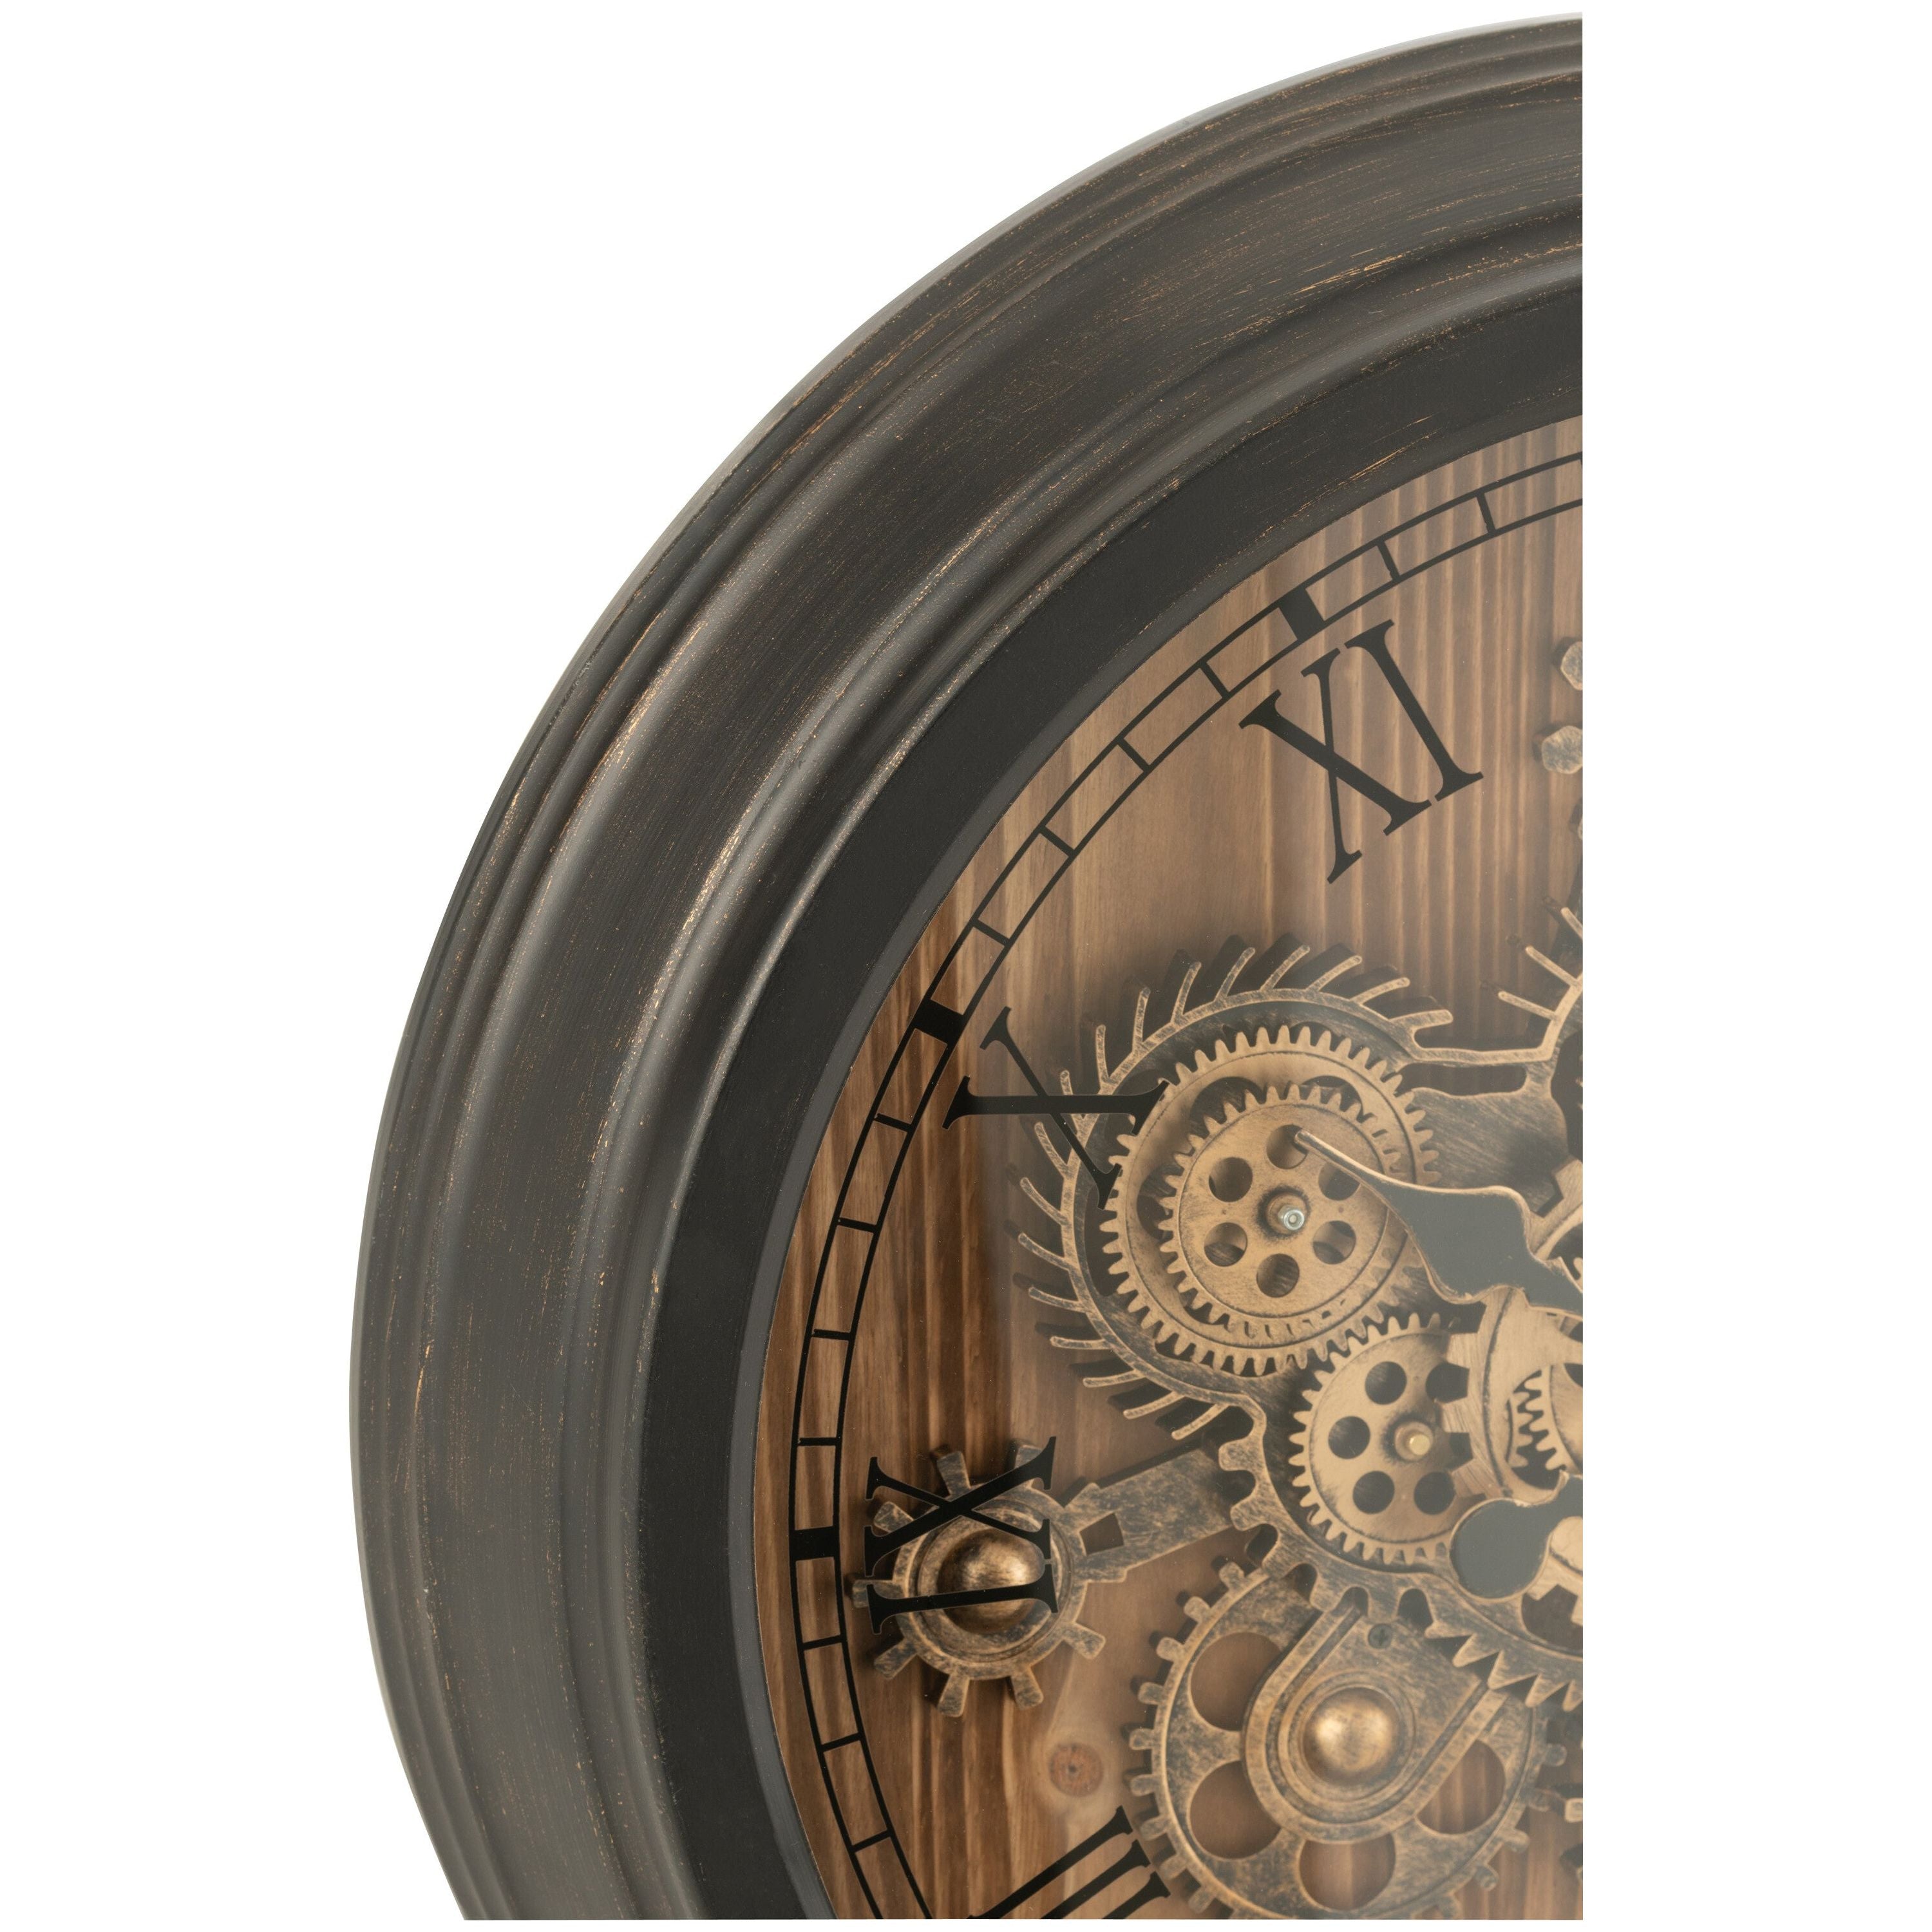 Clock Round Roman Numerals Gears Metal Black Small